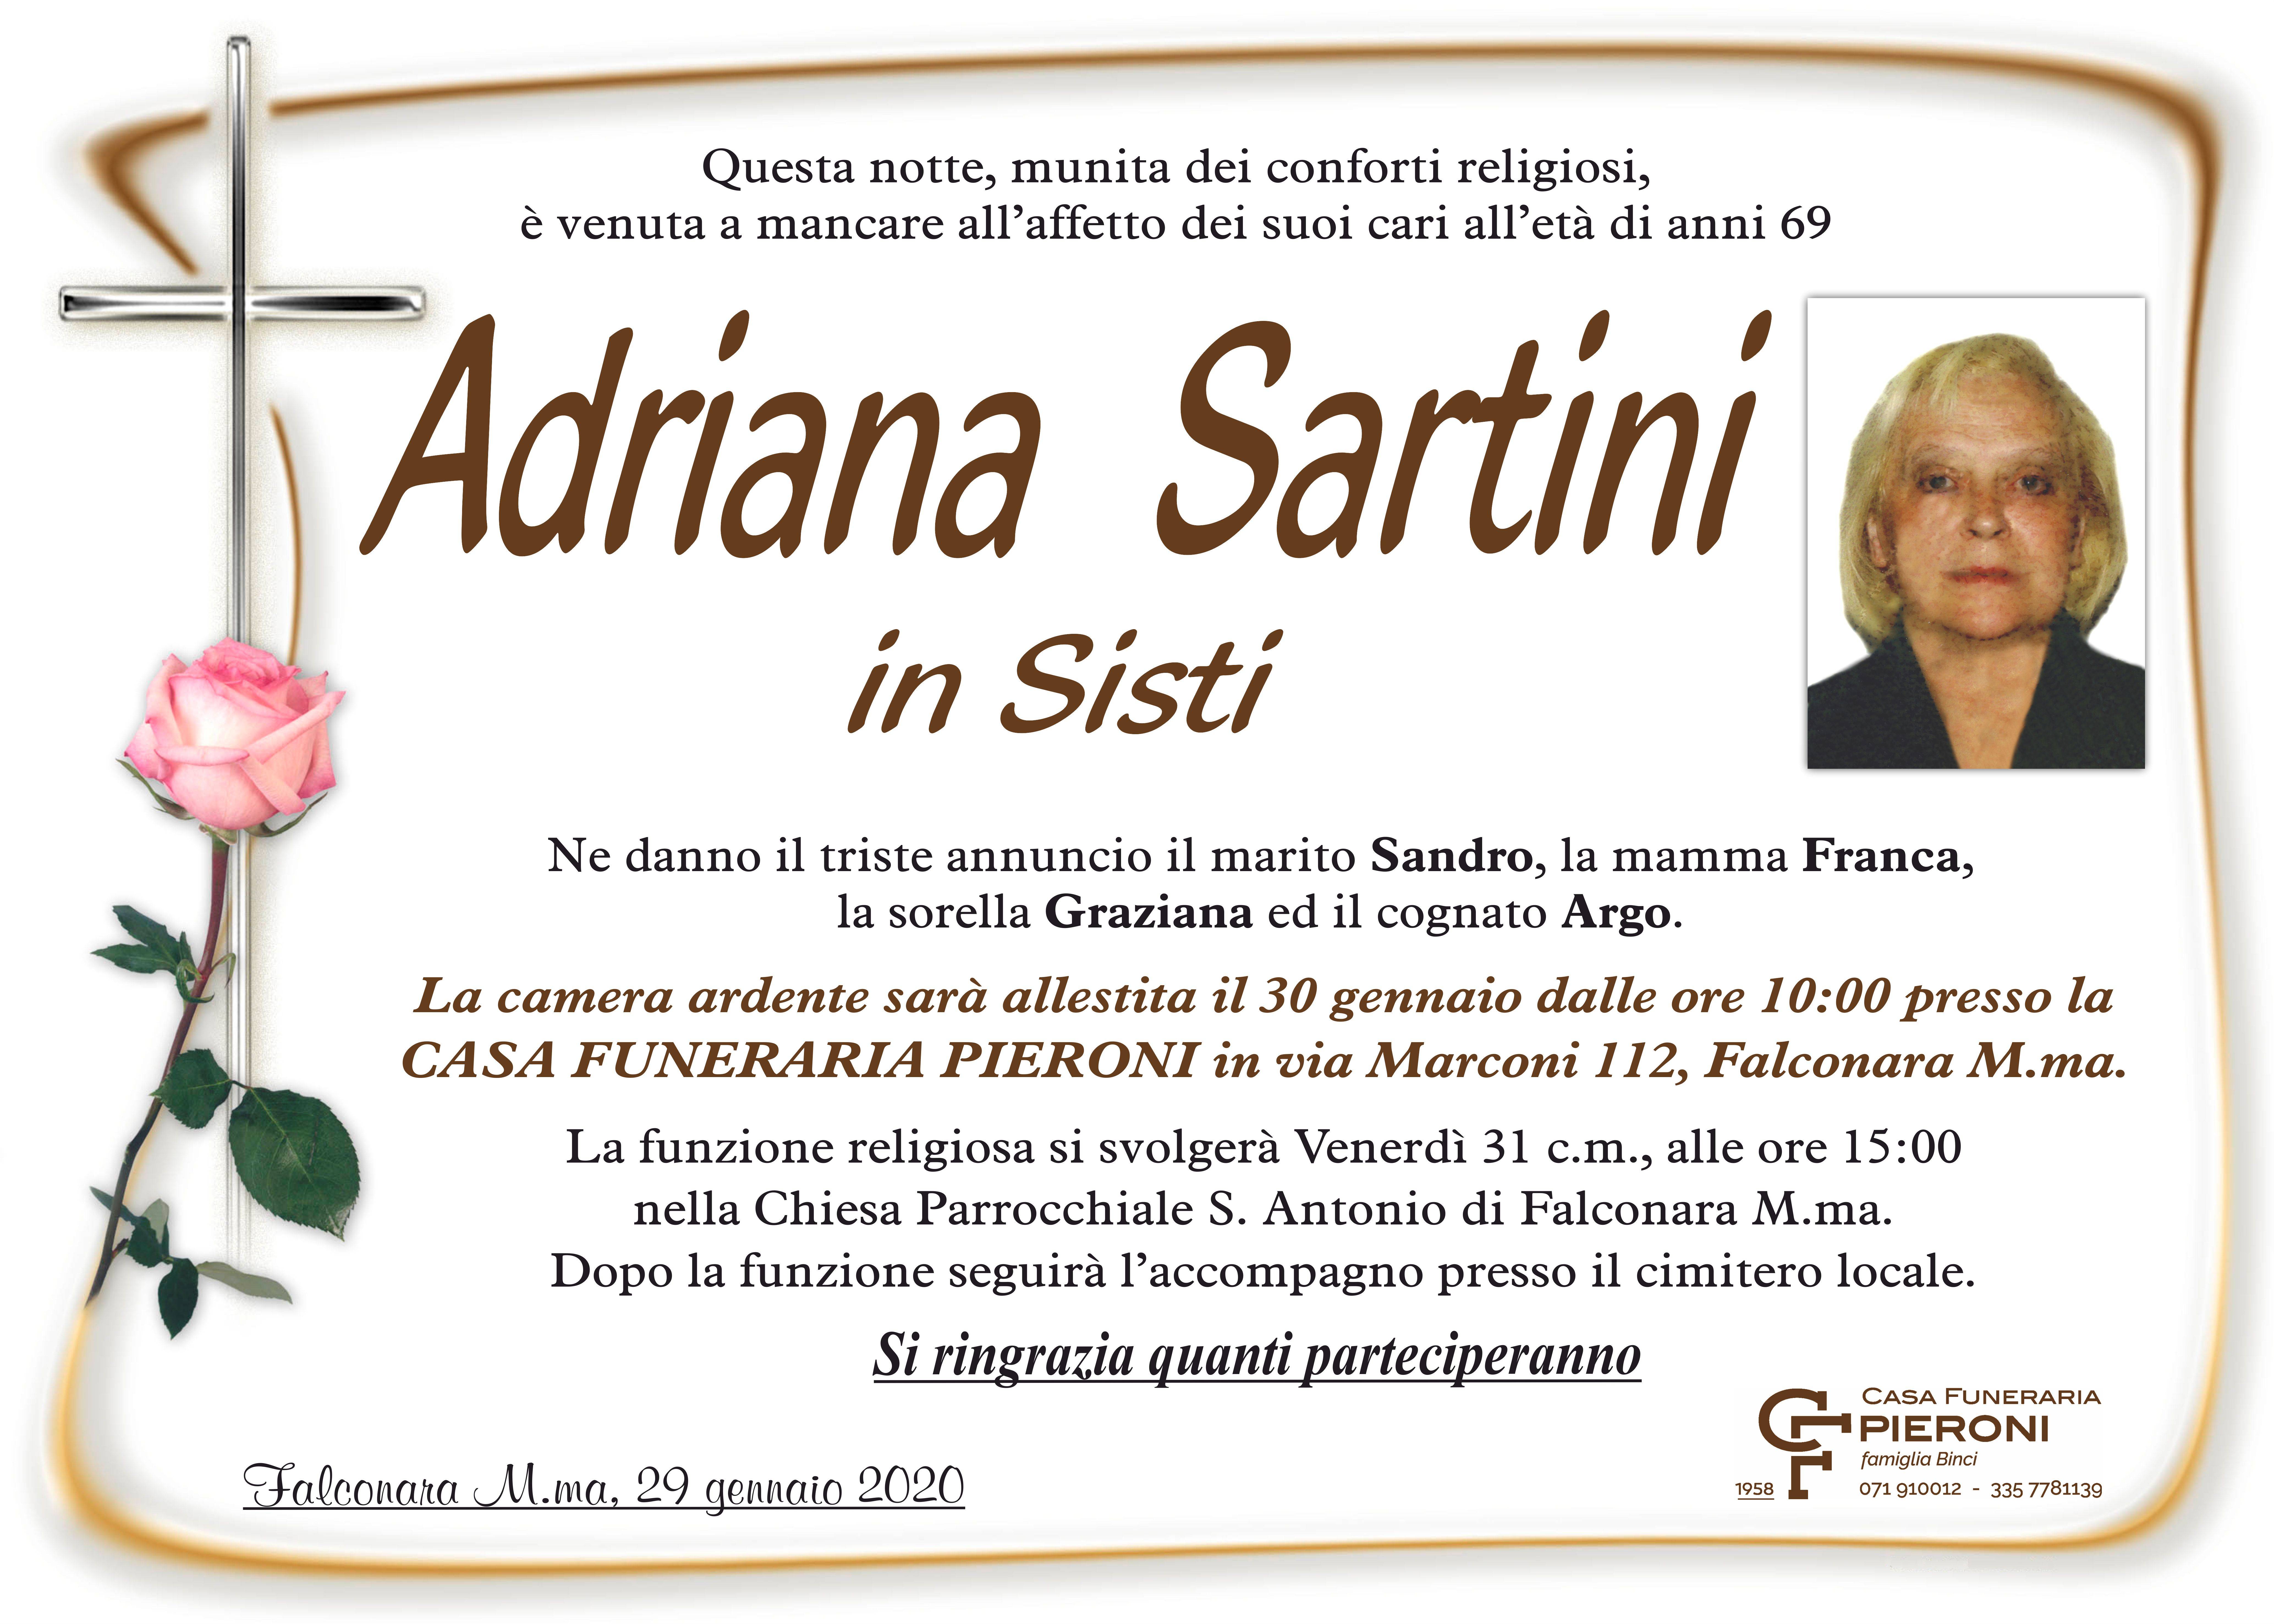 Adriana Sartini